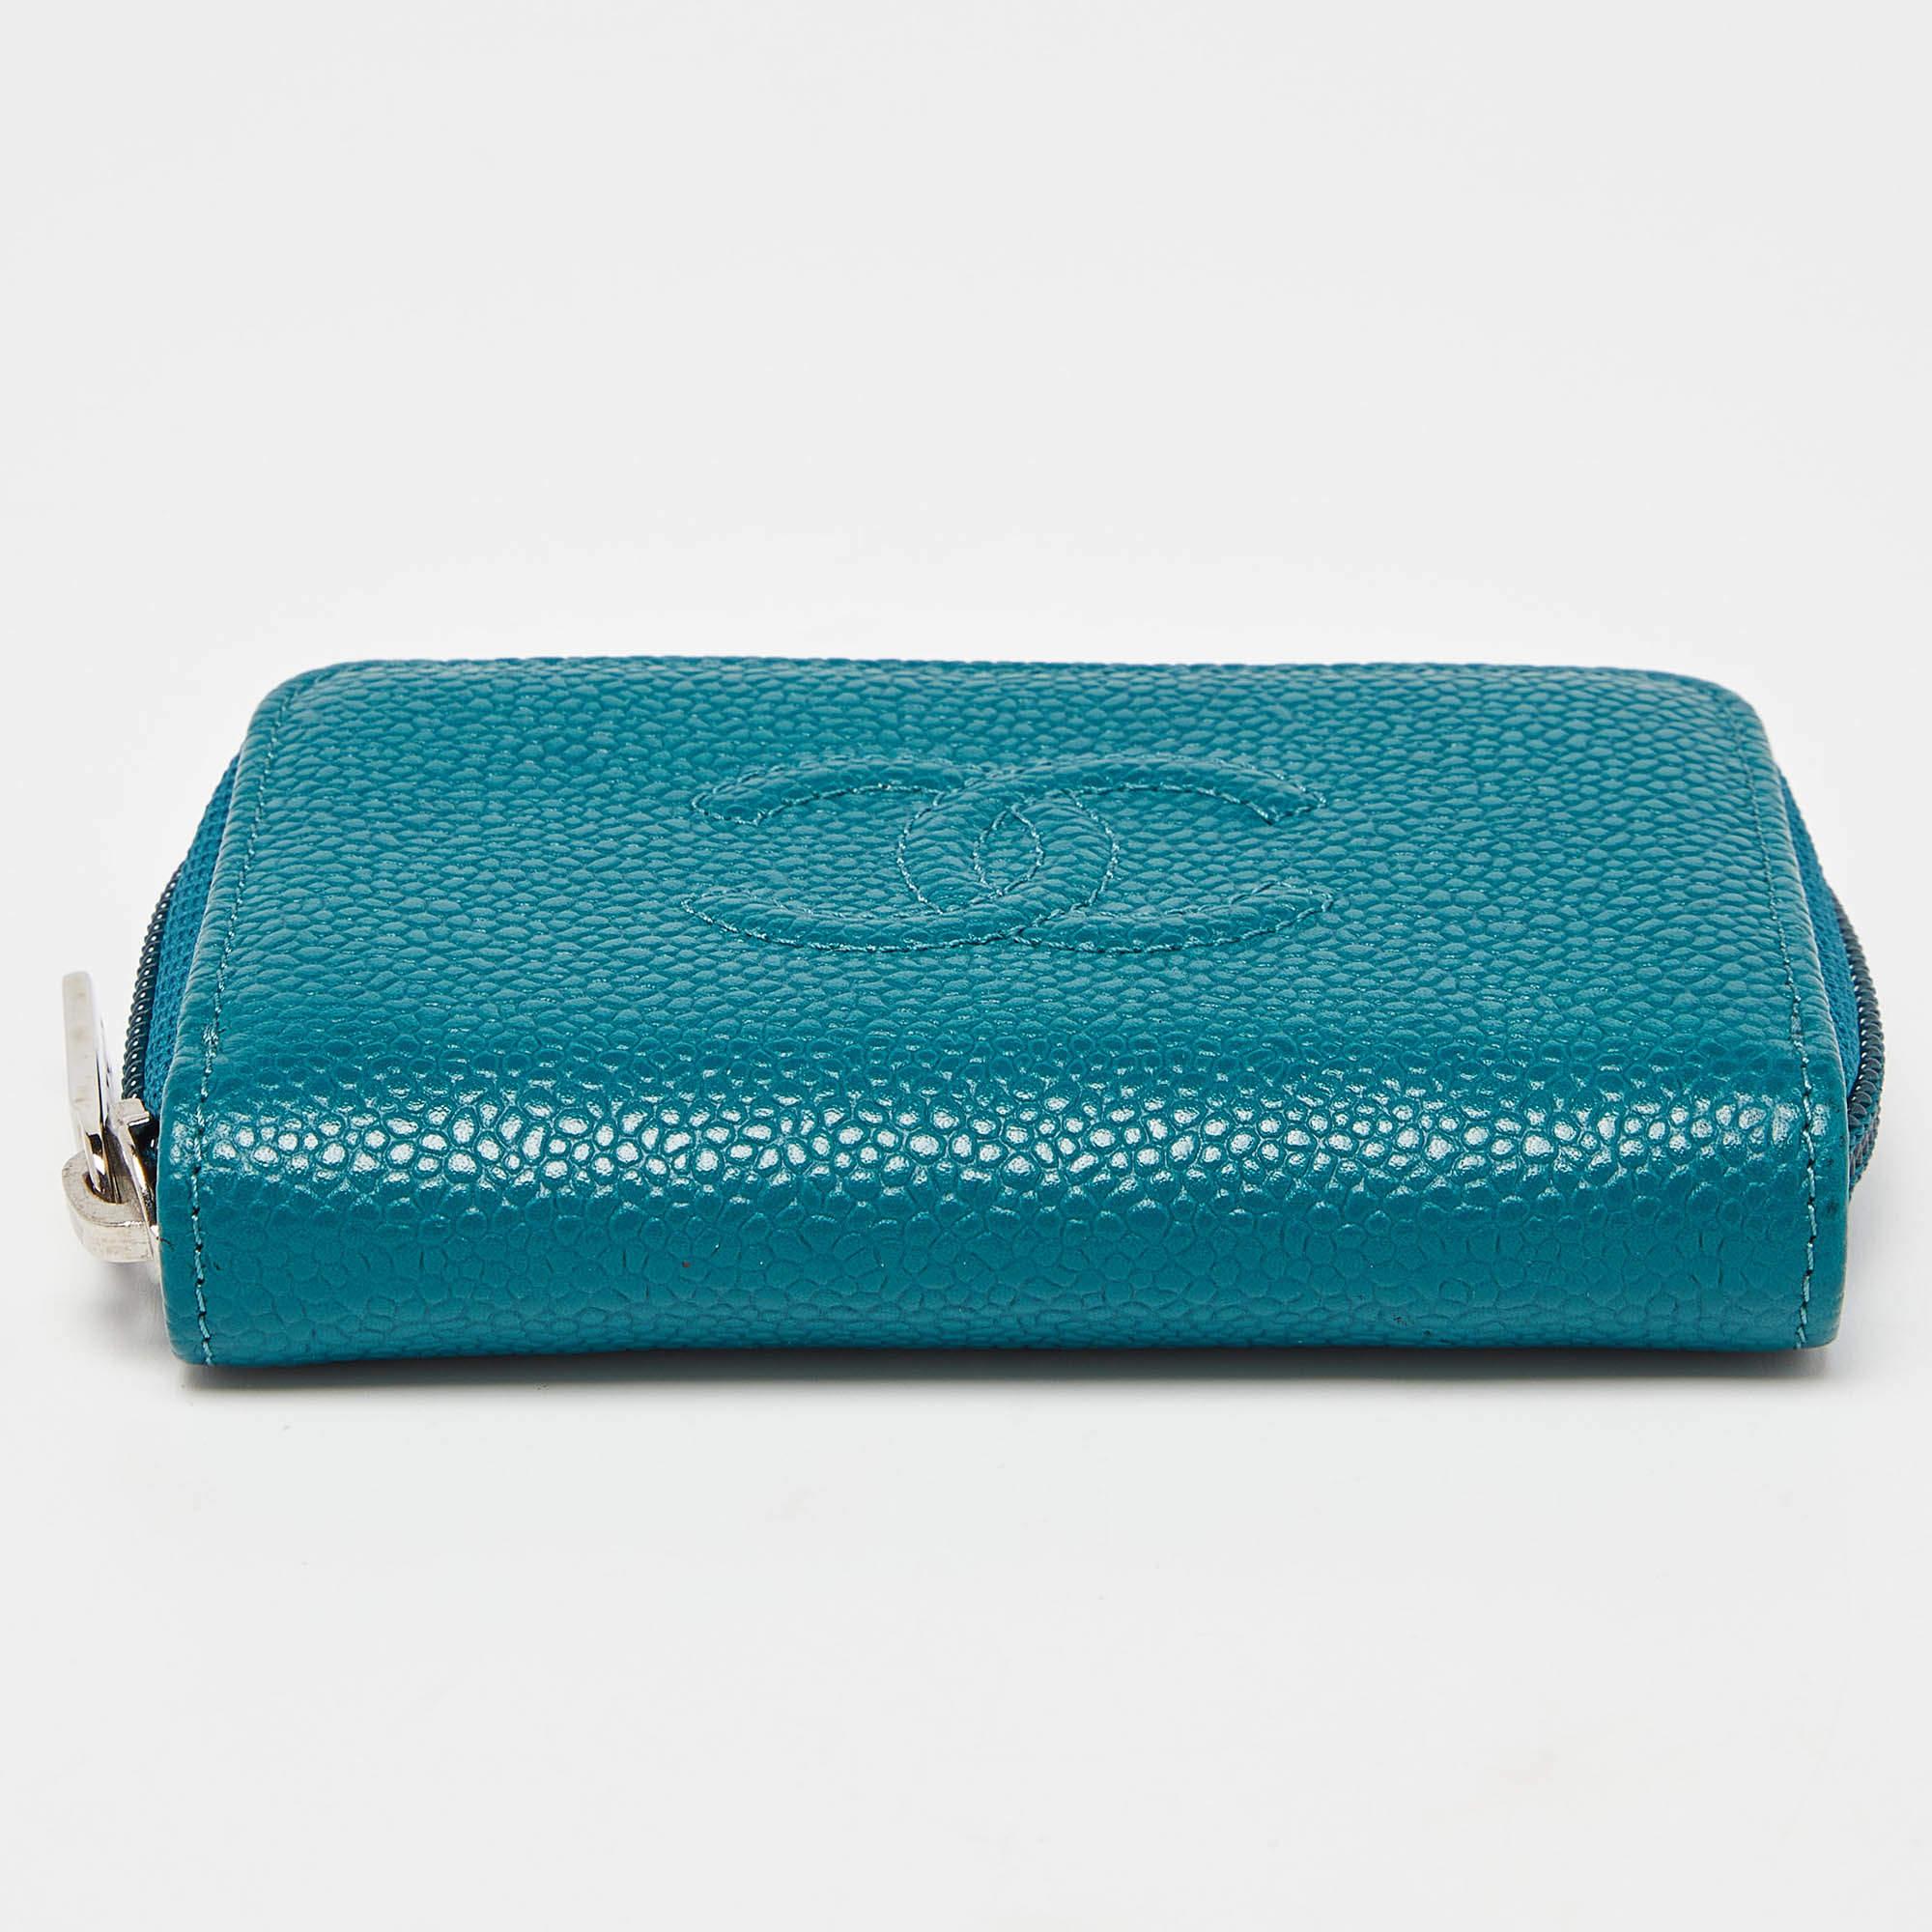 Chanel Teal Blue Caviar Leather CC Zip Coin Purse 4